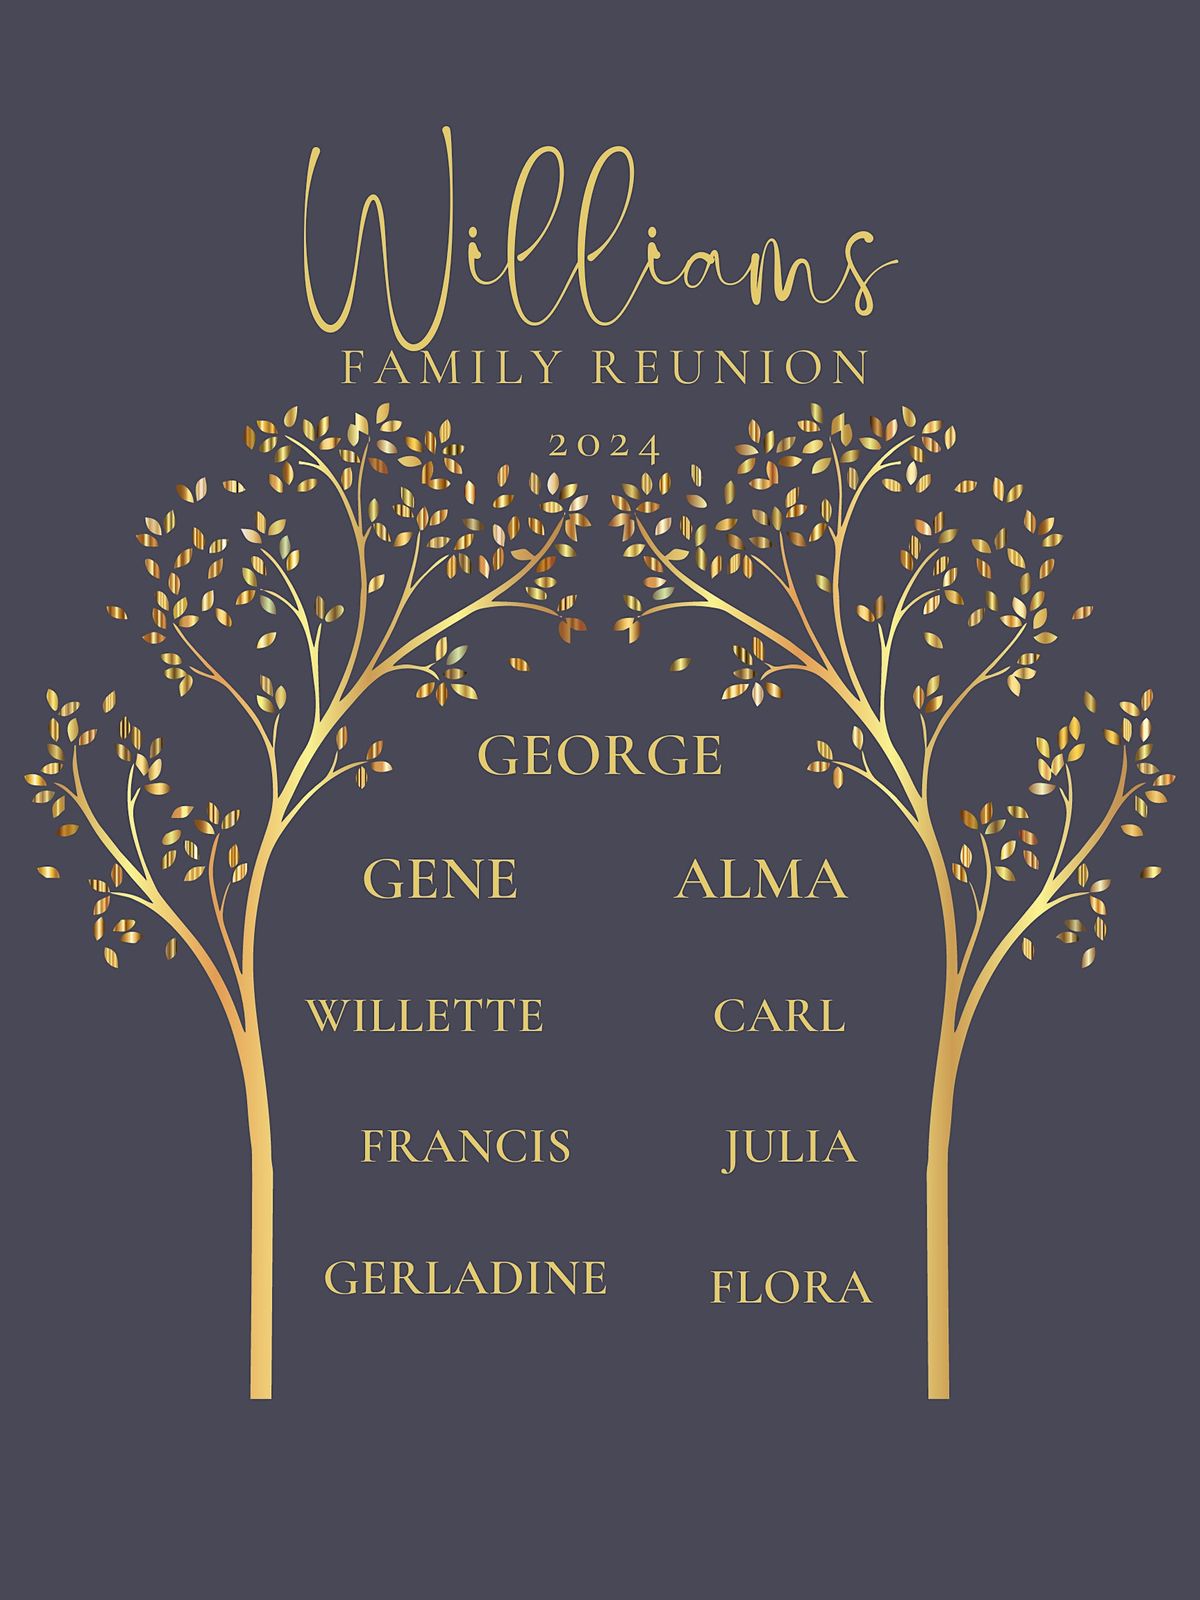 Williams Family Reunion 2024